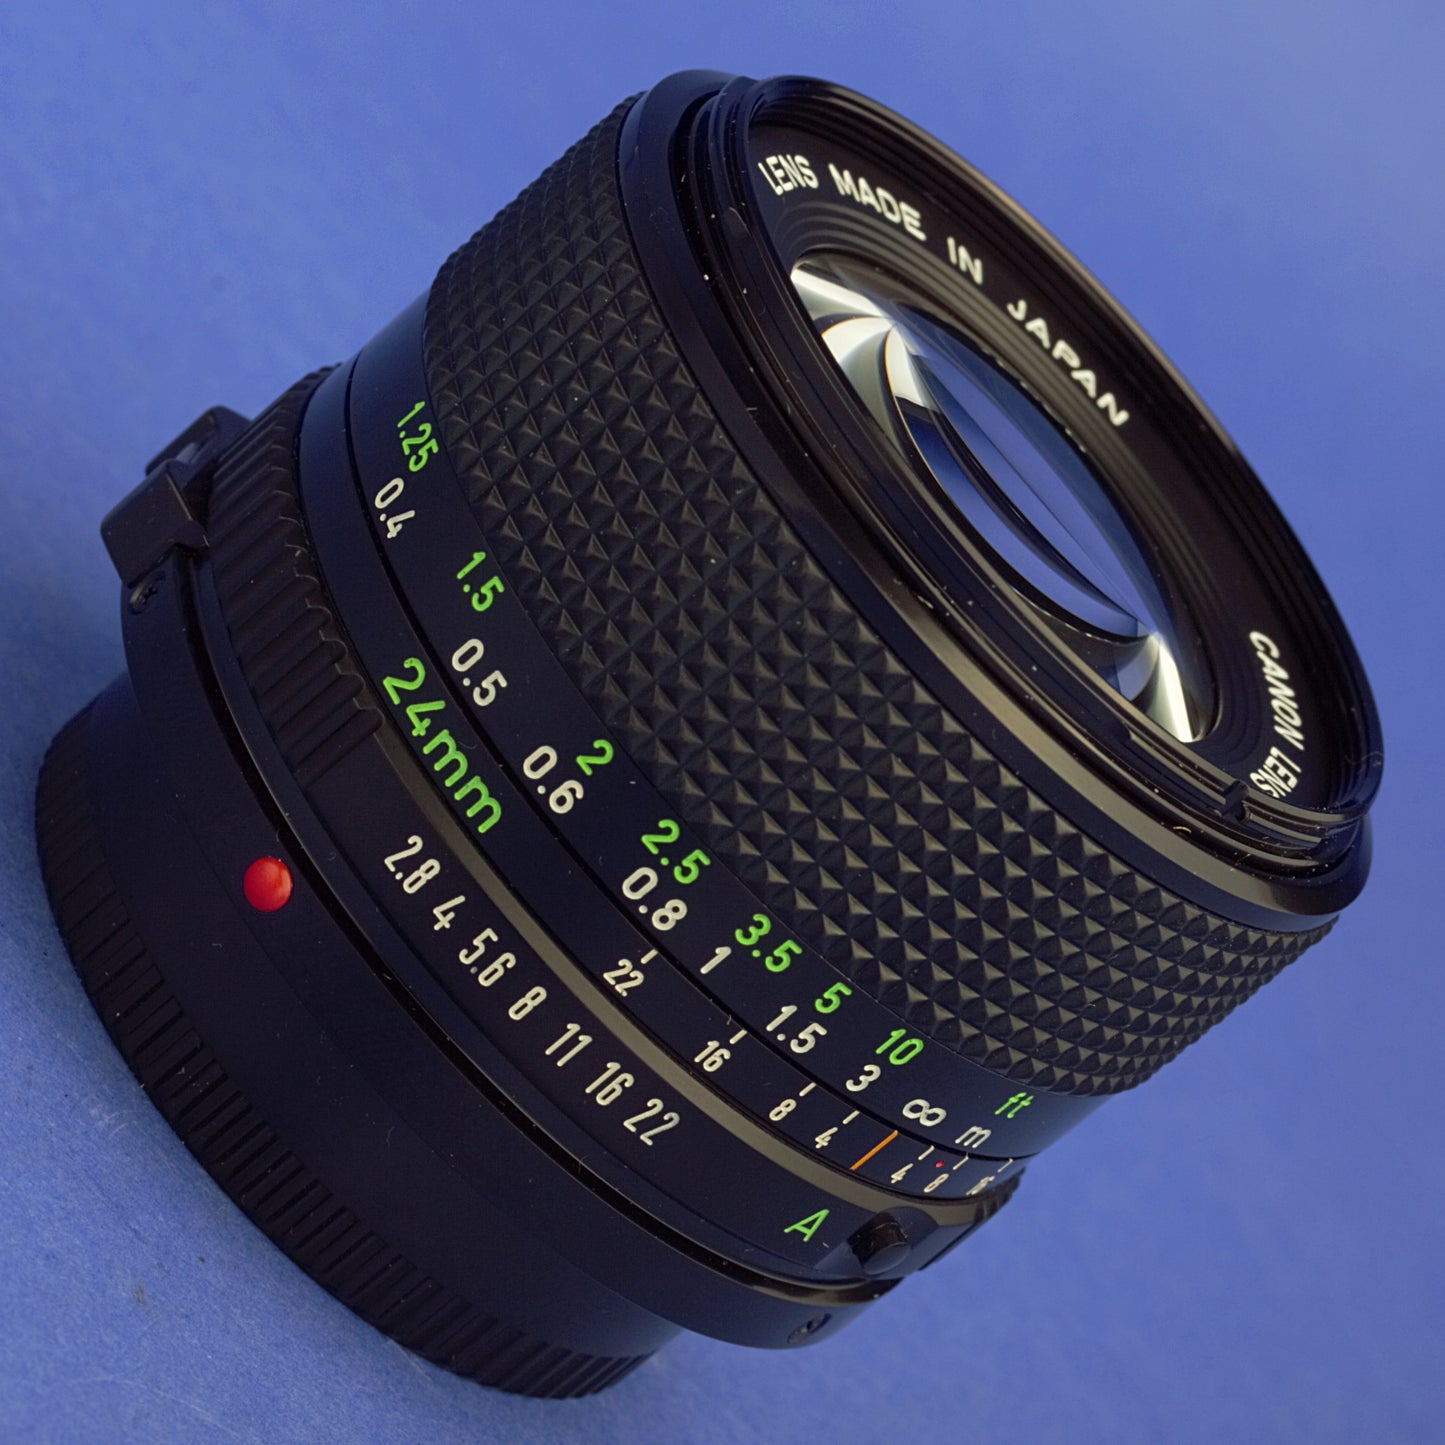 Canon FD 24mm 2.8 Lens Mint Condition